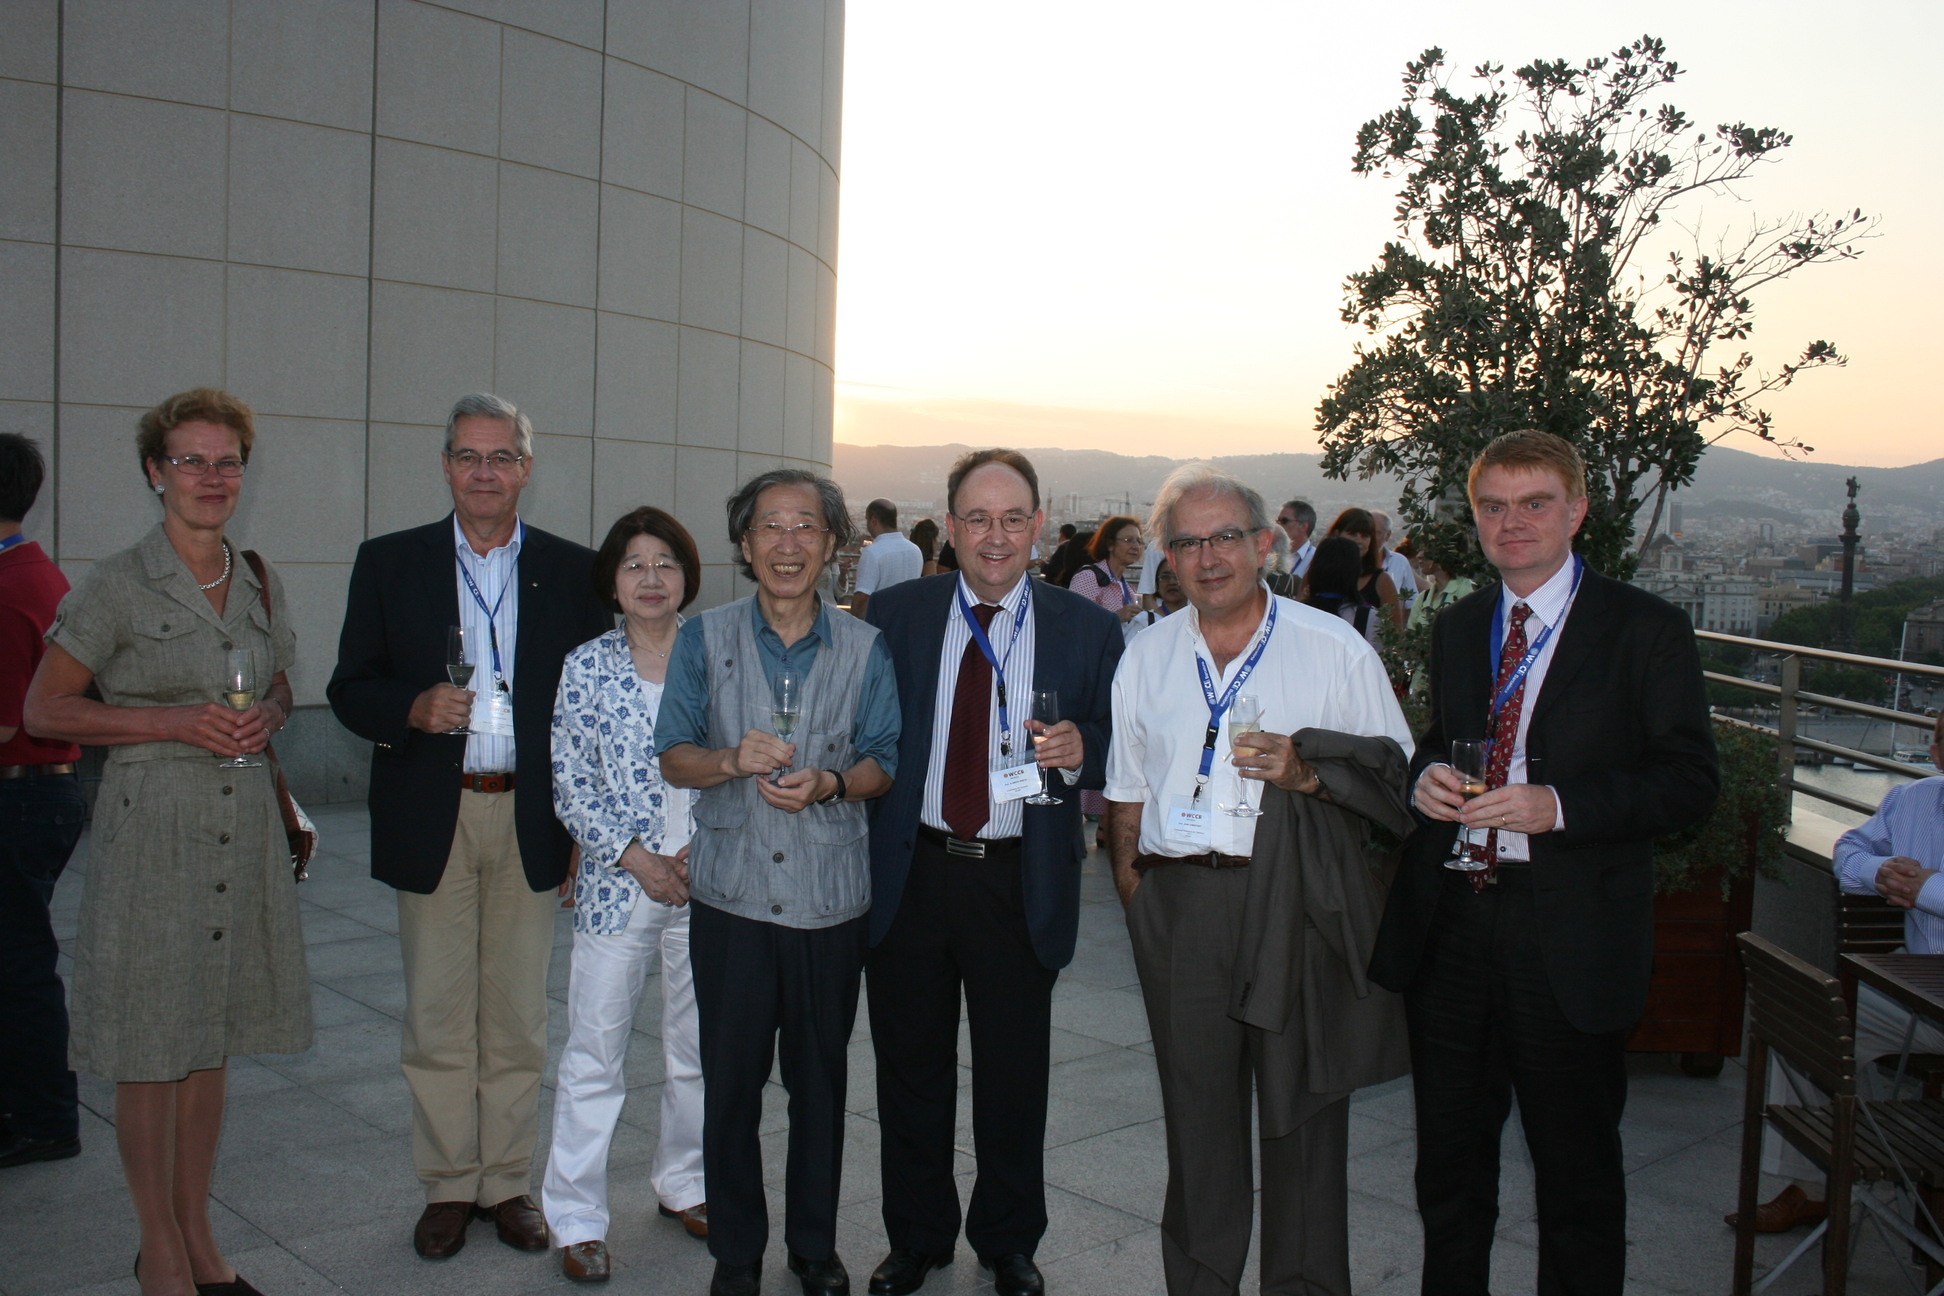 2010 IEEE World Congress on Computational Intelligence (WCCI)